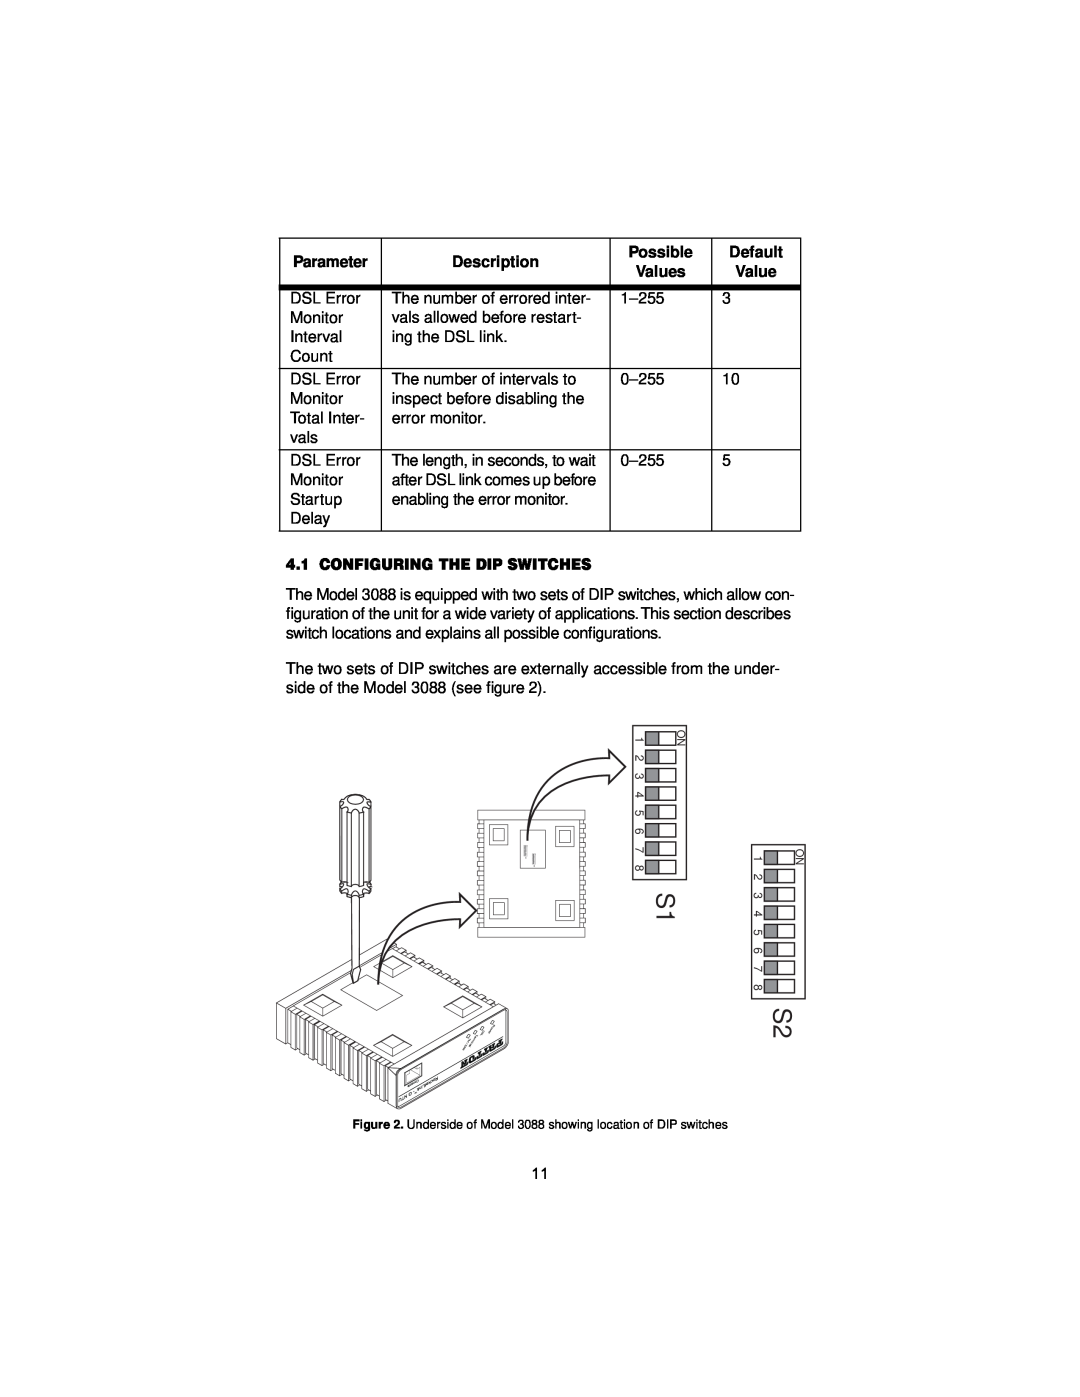 Patton electronic 3088 user manual Configuring The Dip Switches, Parameter, Description, Possible, Default 